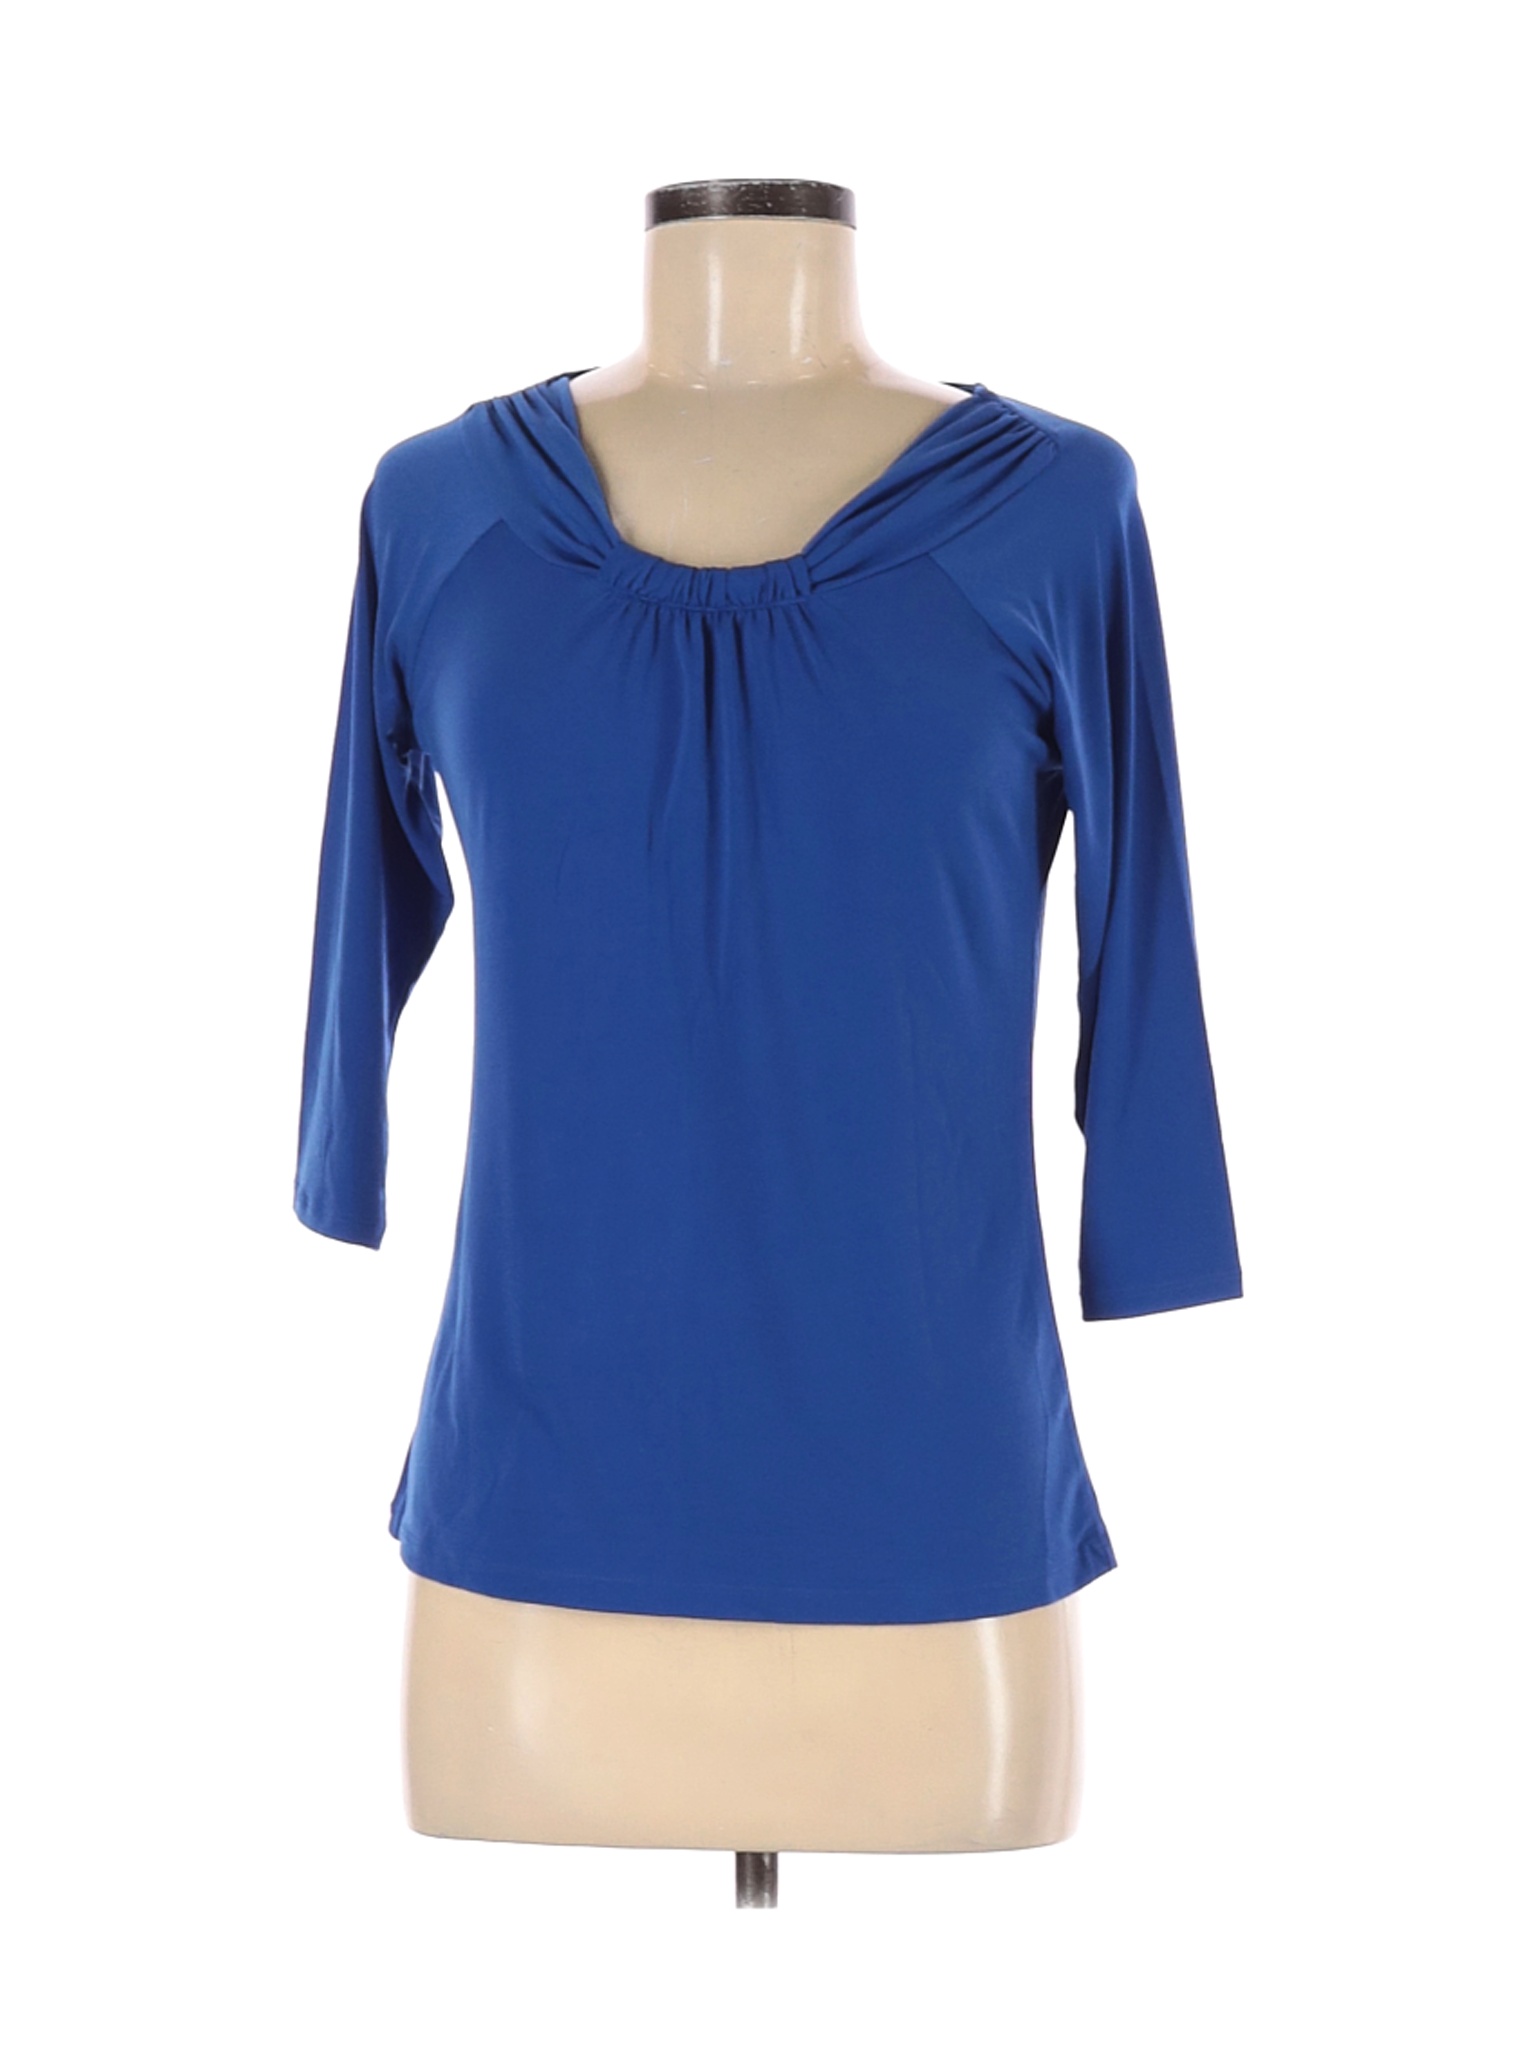 Ann Taylor Women Blue 3/4 Sleeve Top M | eBay